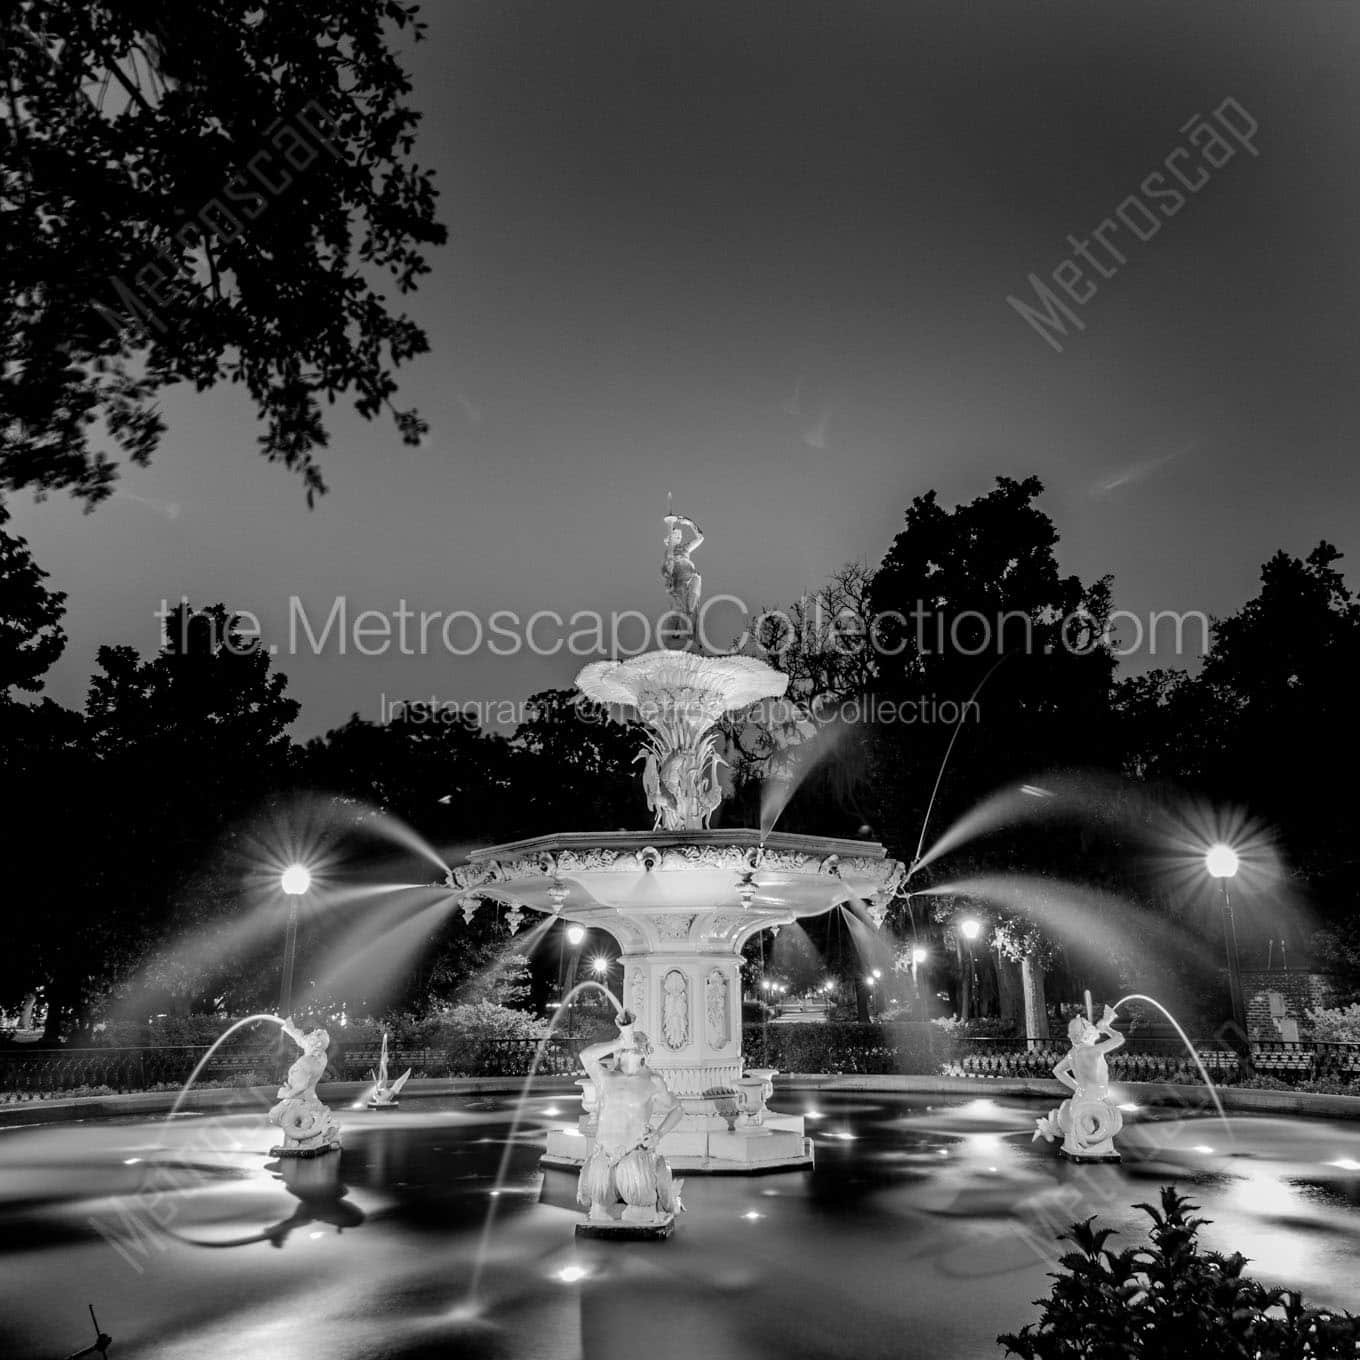 forsyth fountain at night Black & White Office Art